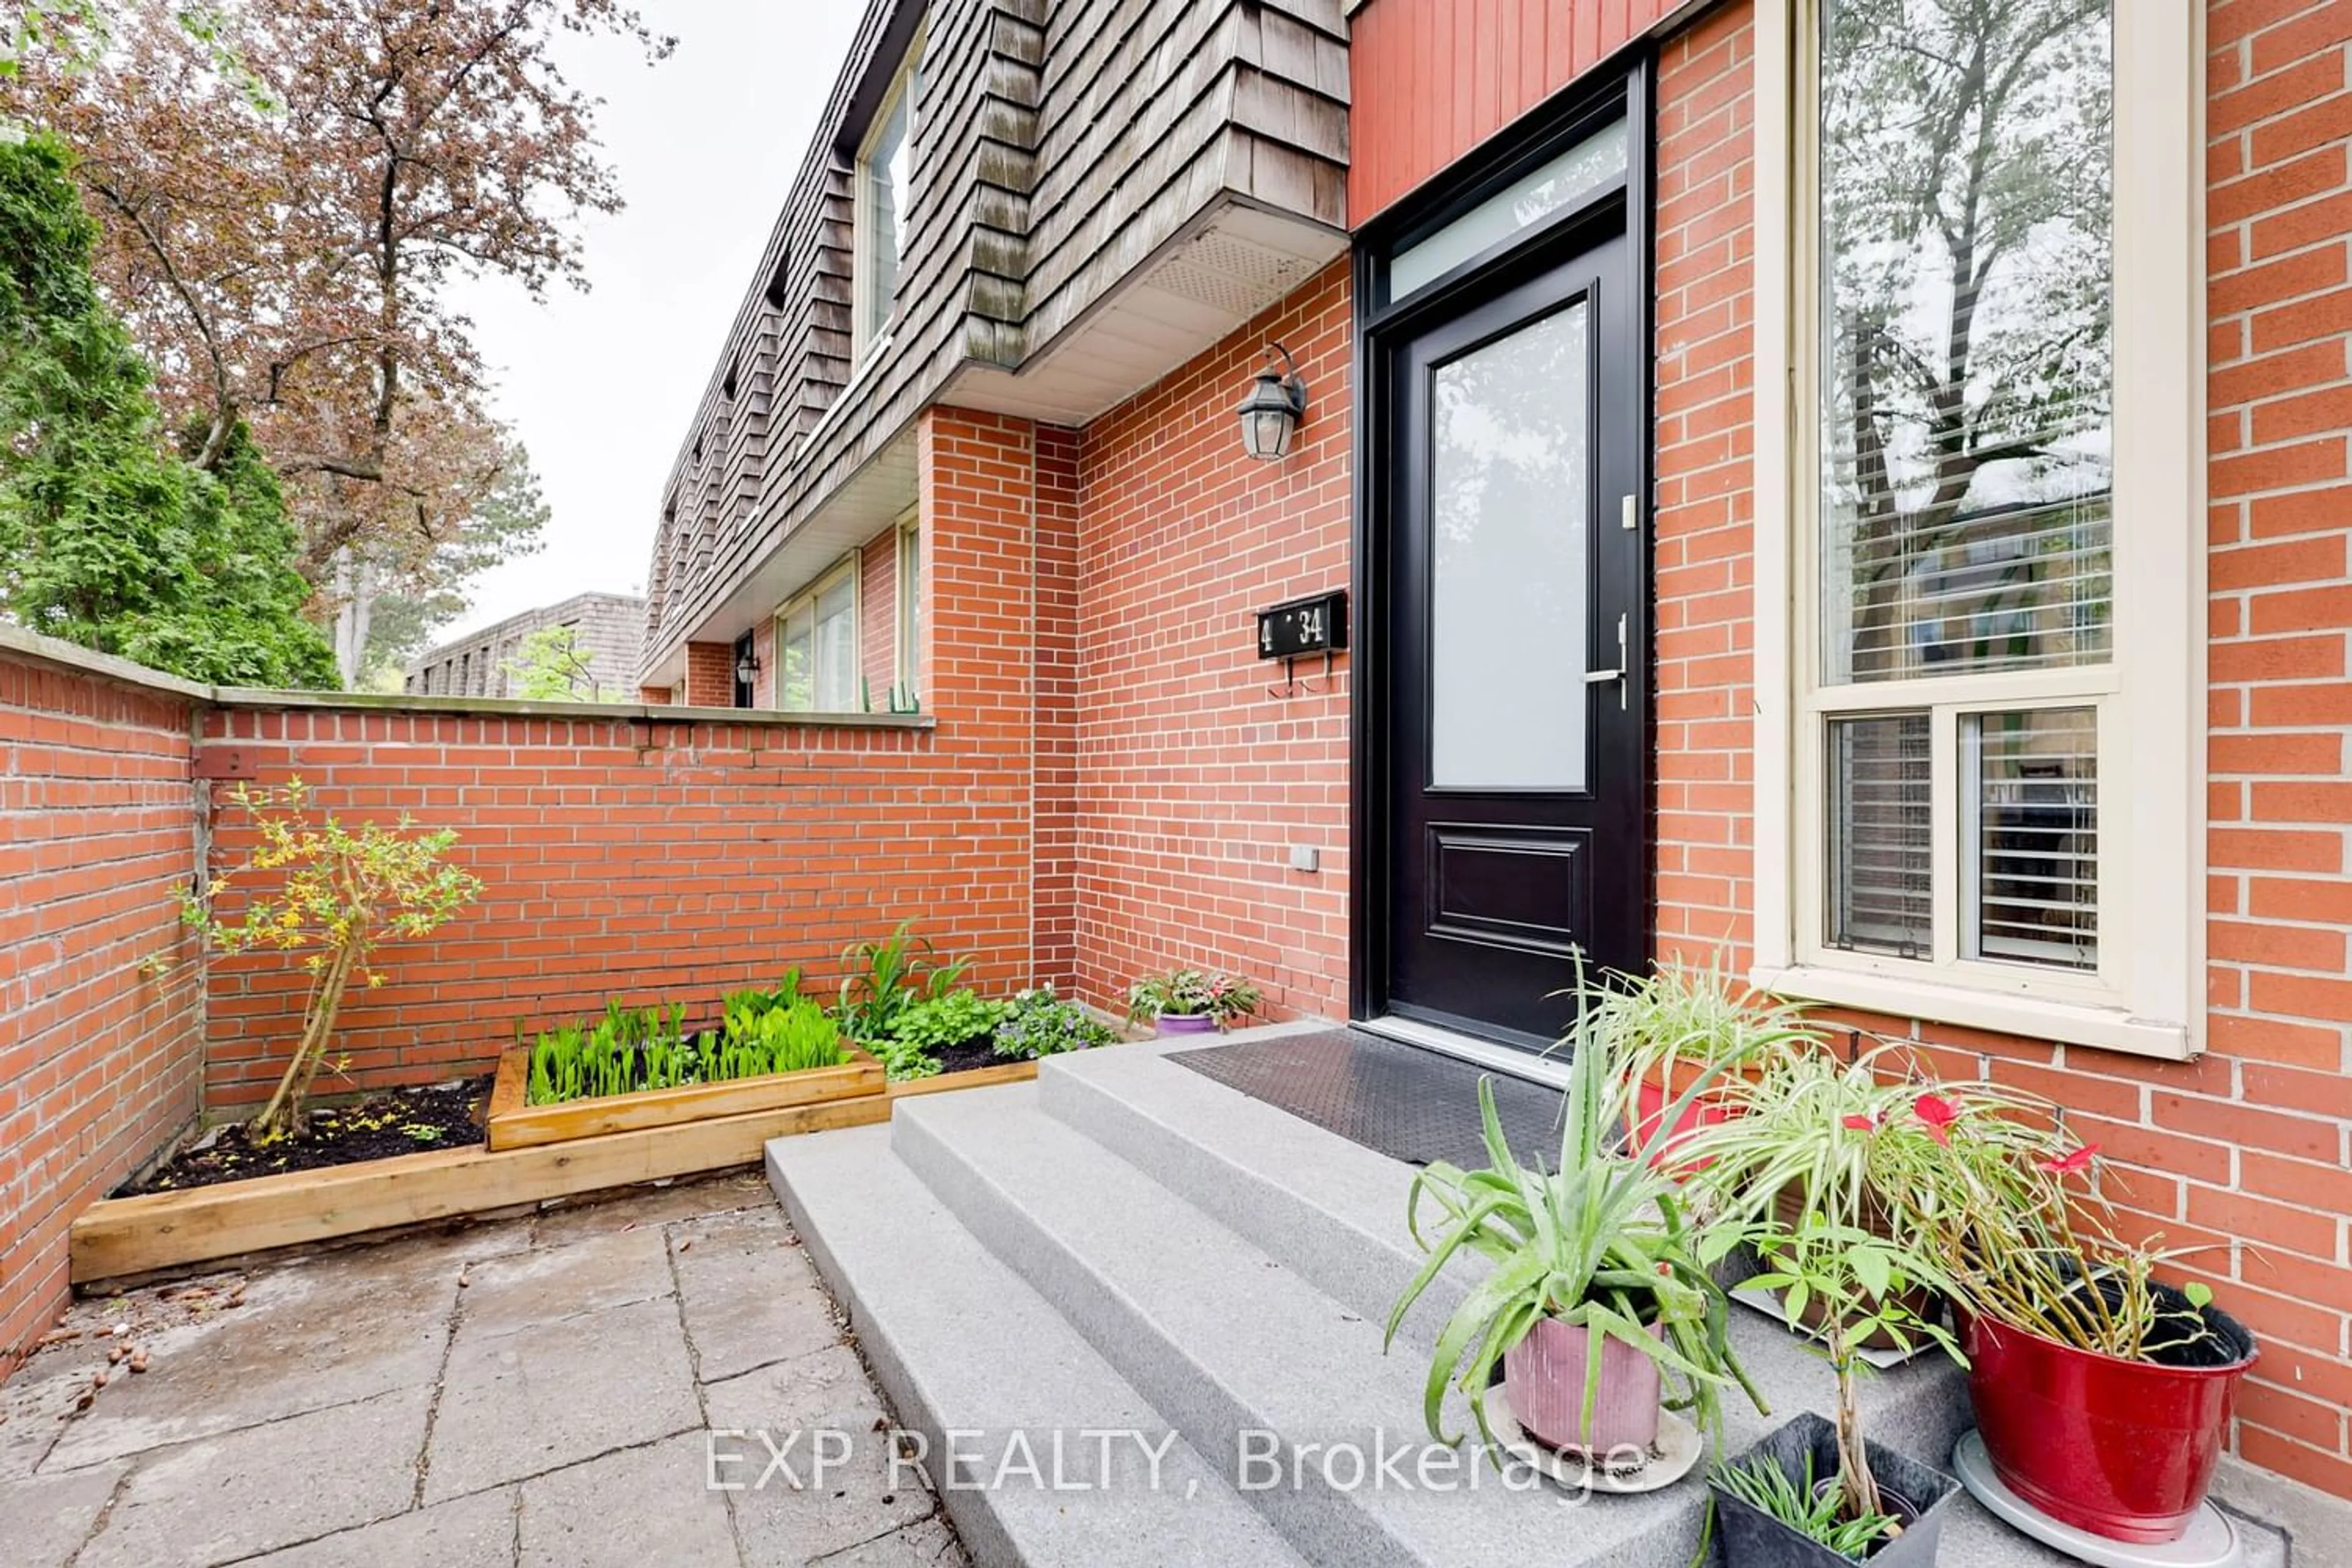 Home with brick exterior material for 34 Yorkminster Rd #Th4, Toronto Ontario M2P 2A4